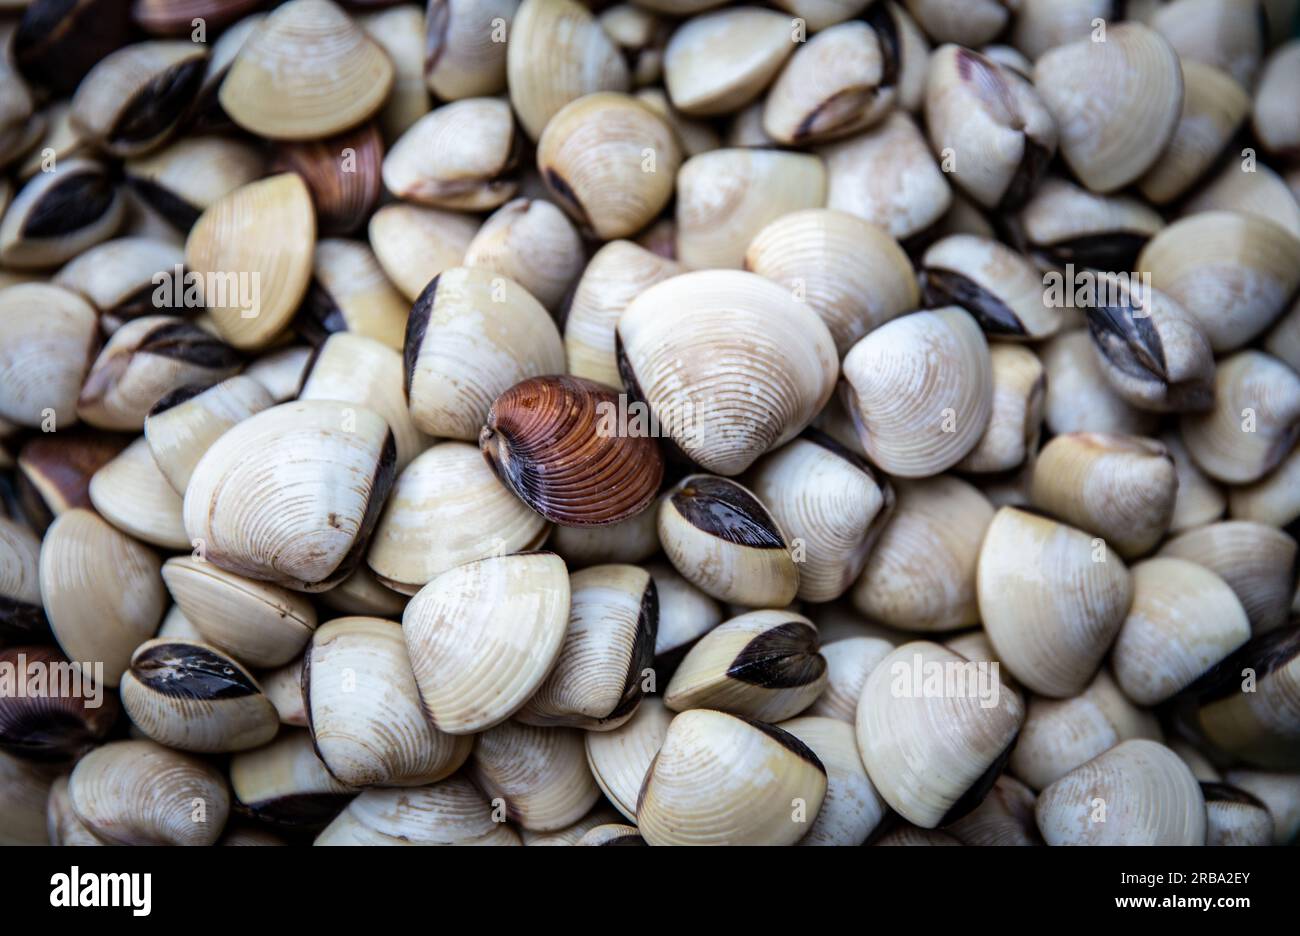 Freshlt caught clams for the fish market Stock Photo